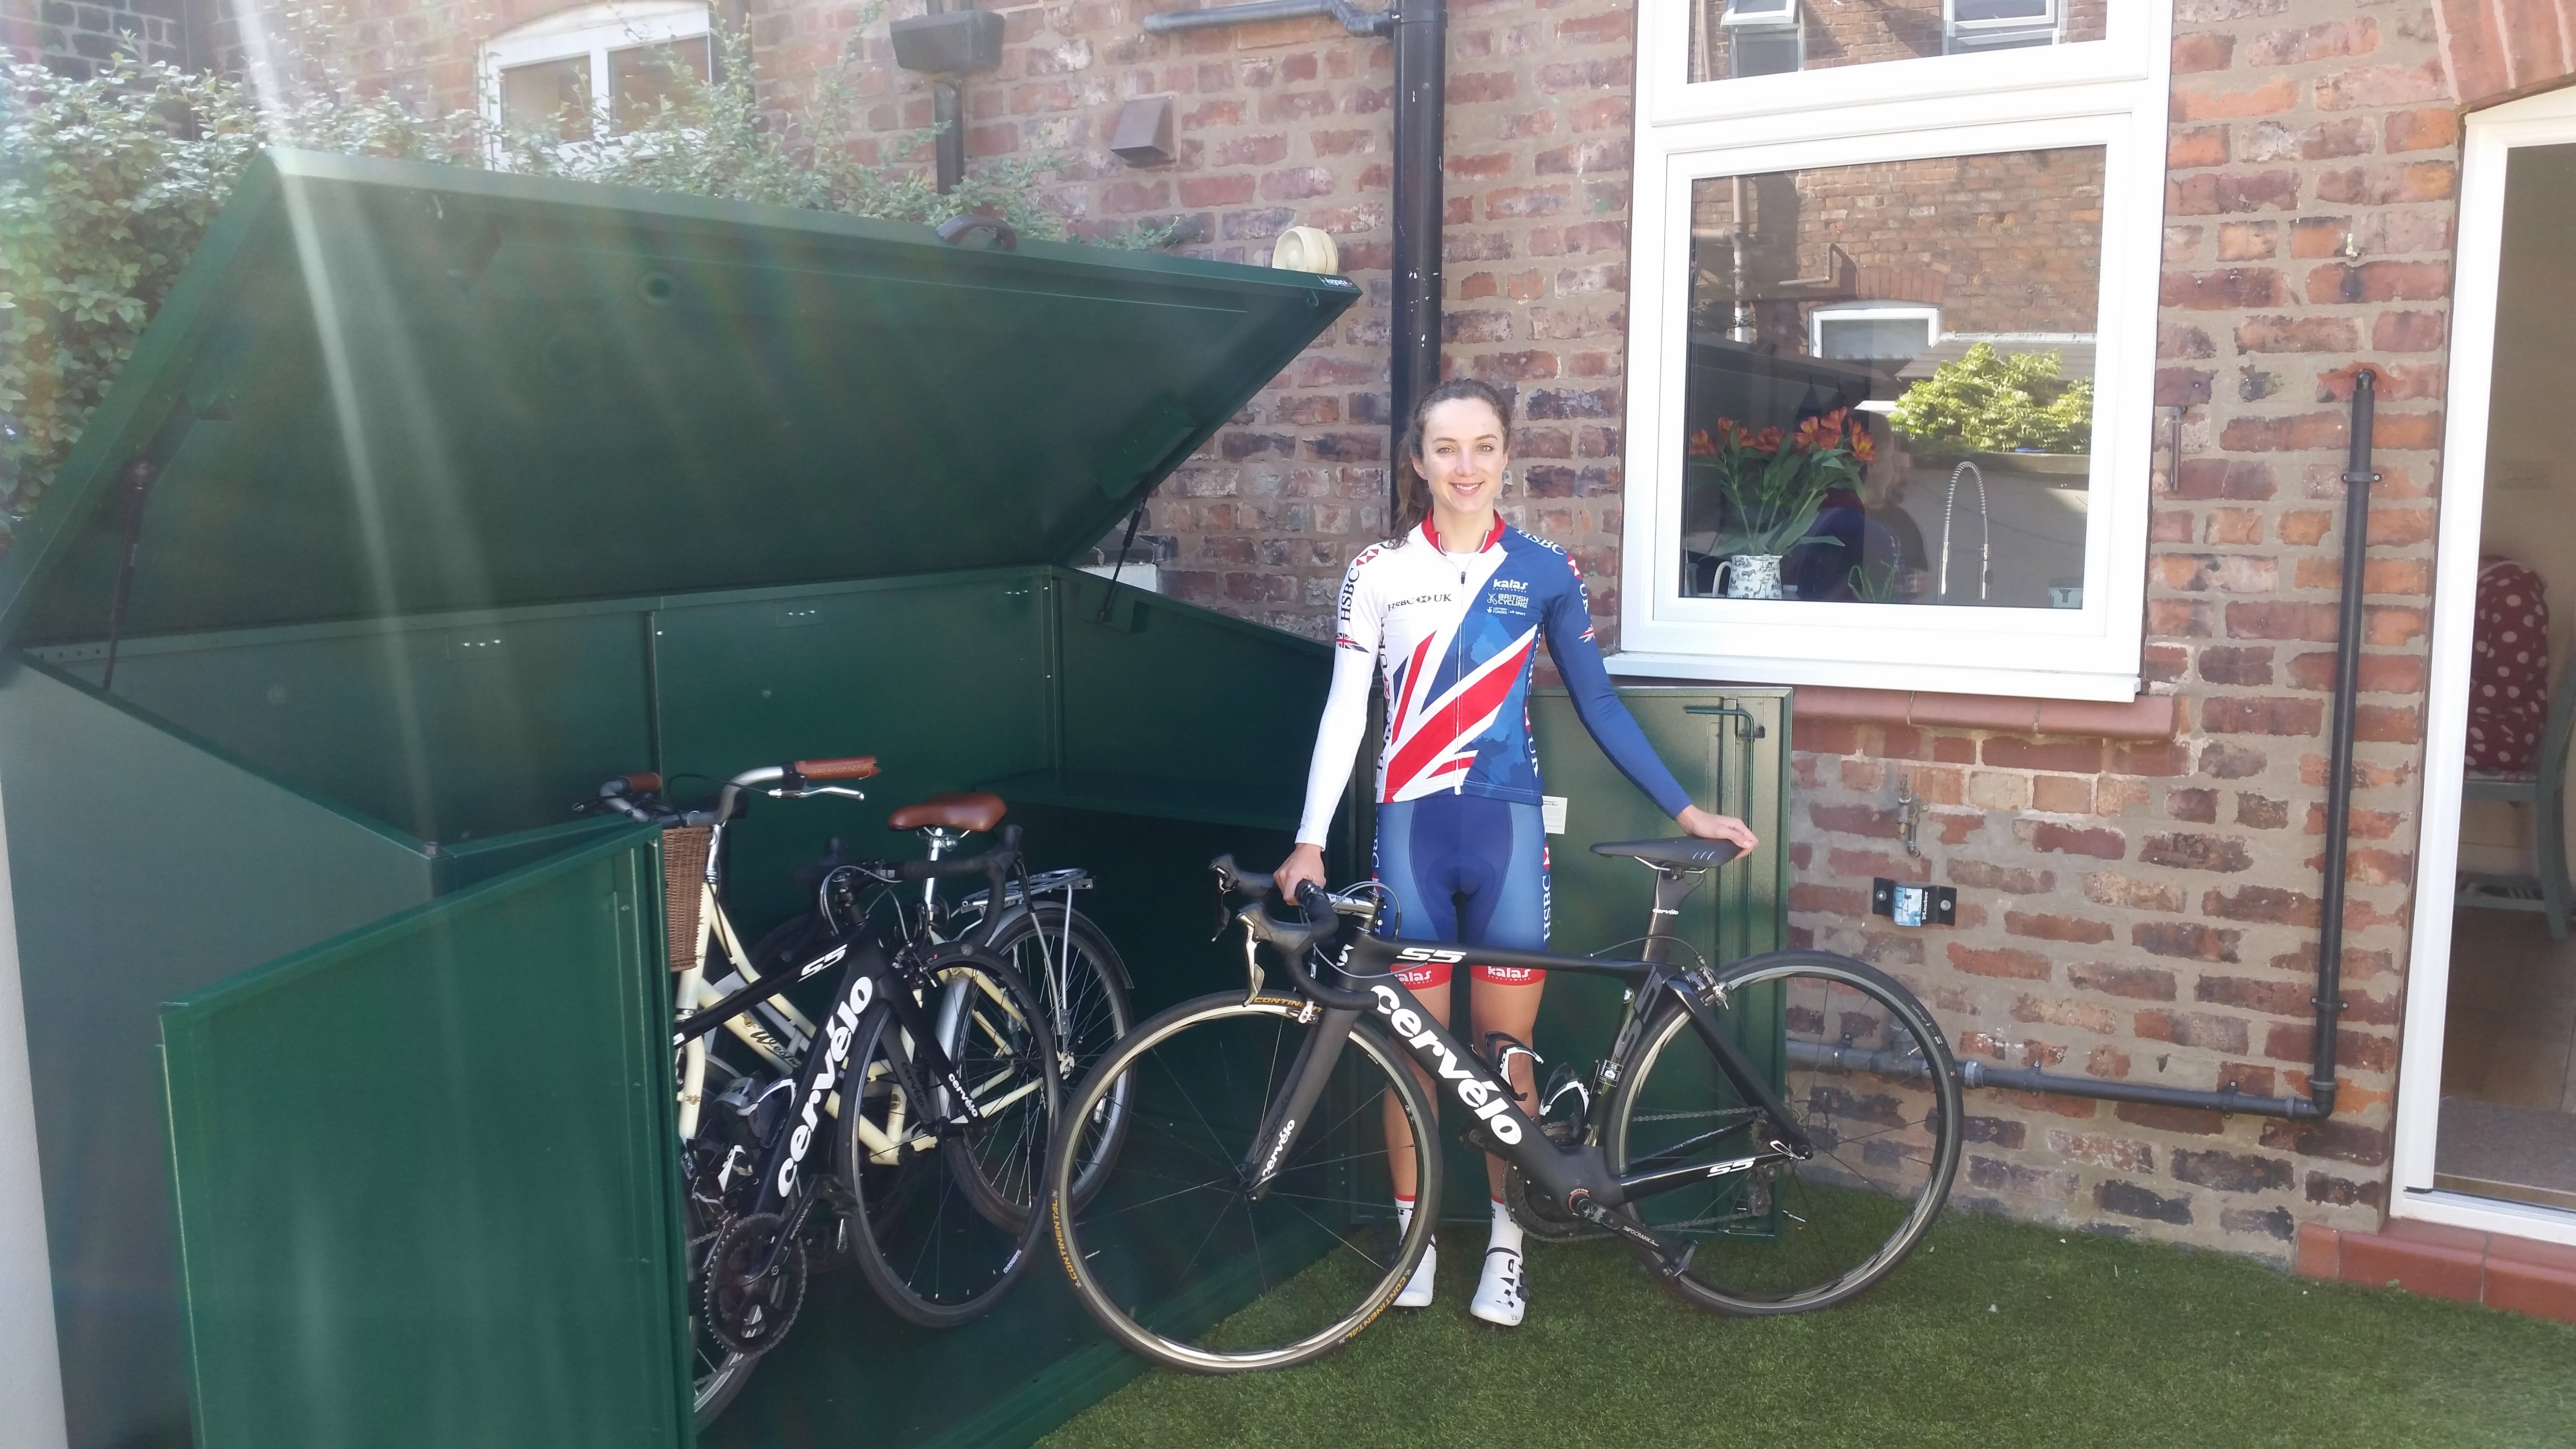 Elinor Barker Team GB Kit & Asgard Bike Shed